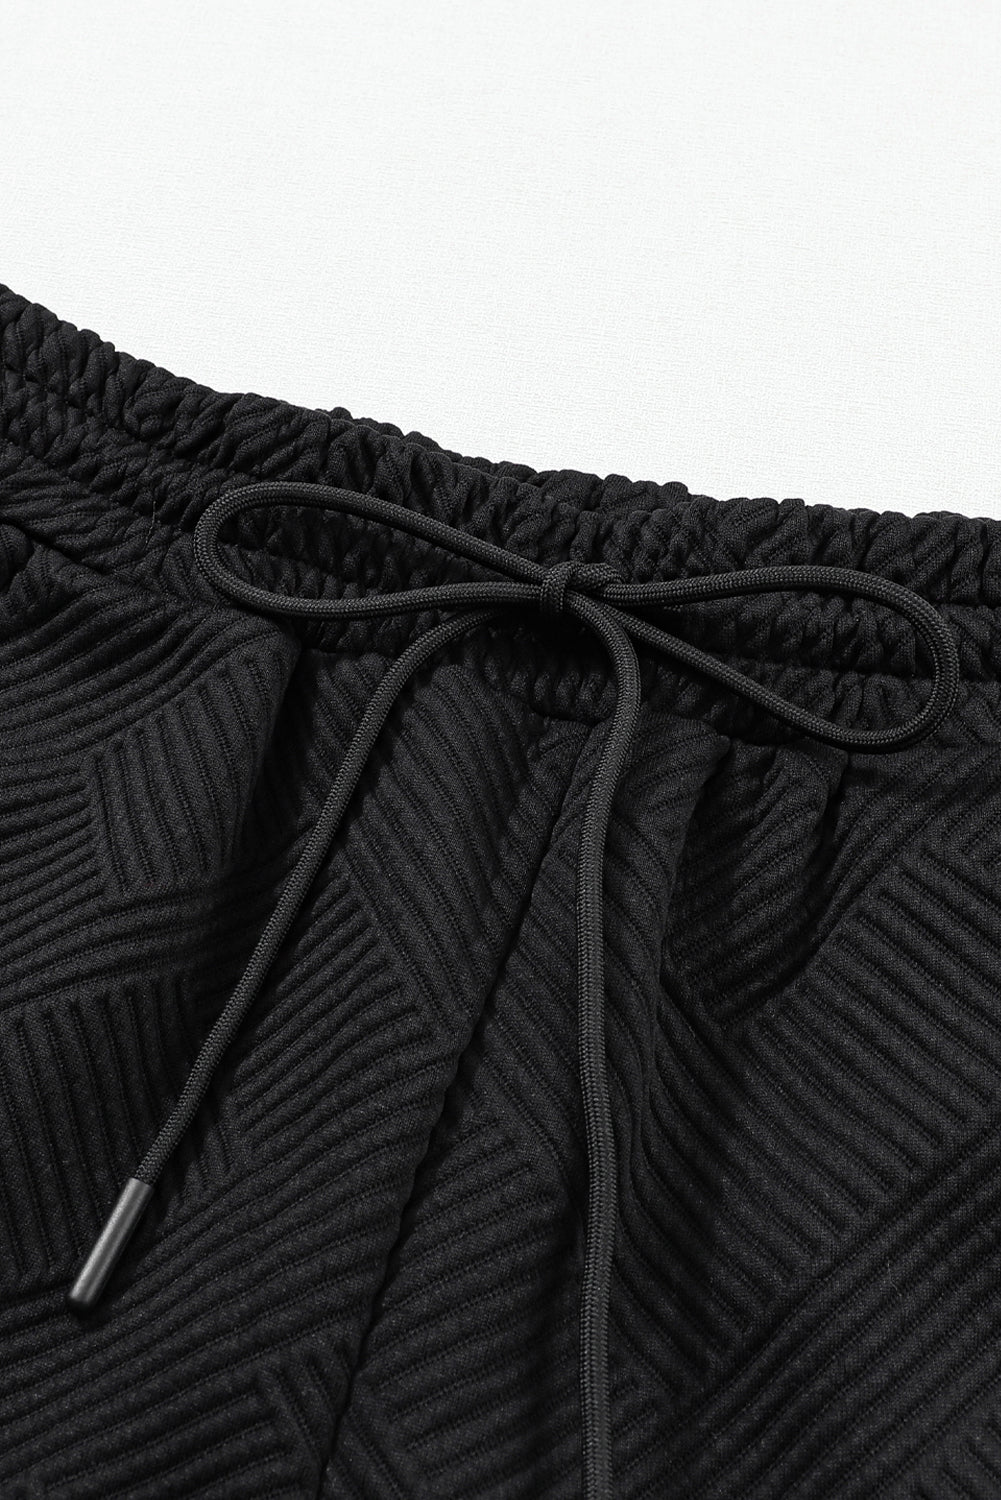 Black Textured Long Sleeve Top and Drawstring Shorts Set - SELFTRITSS